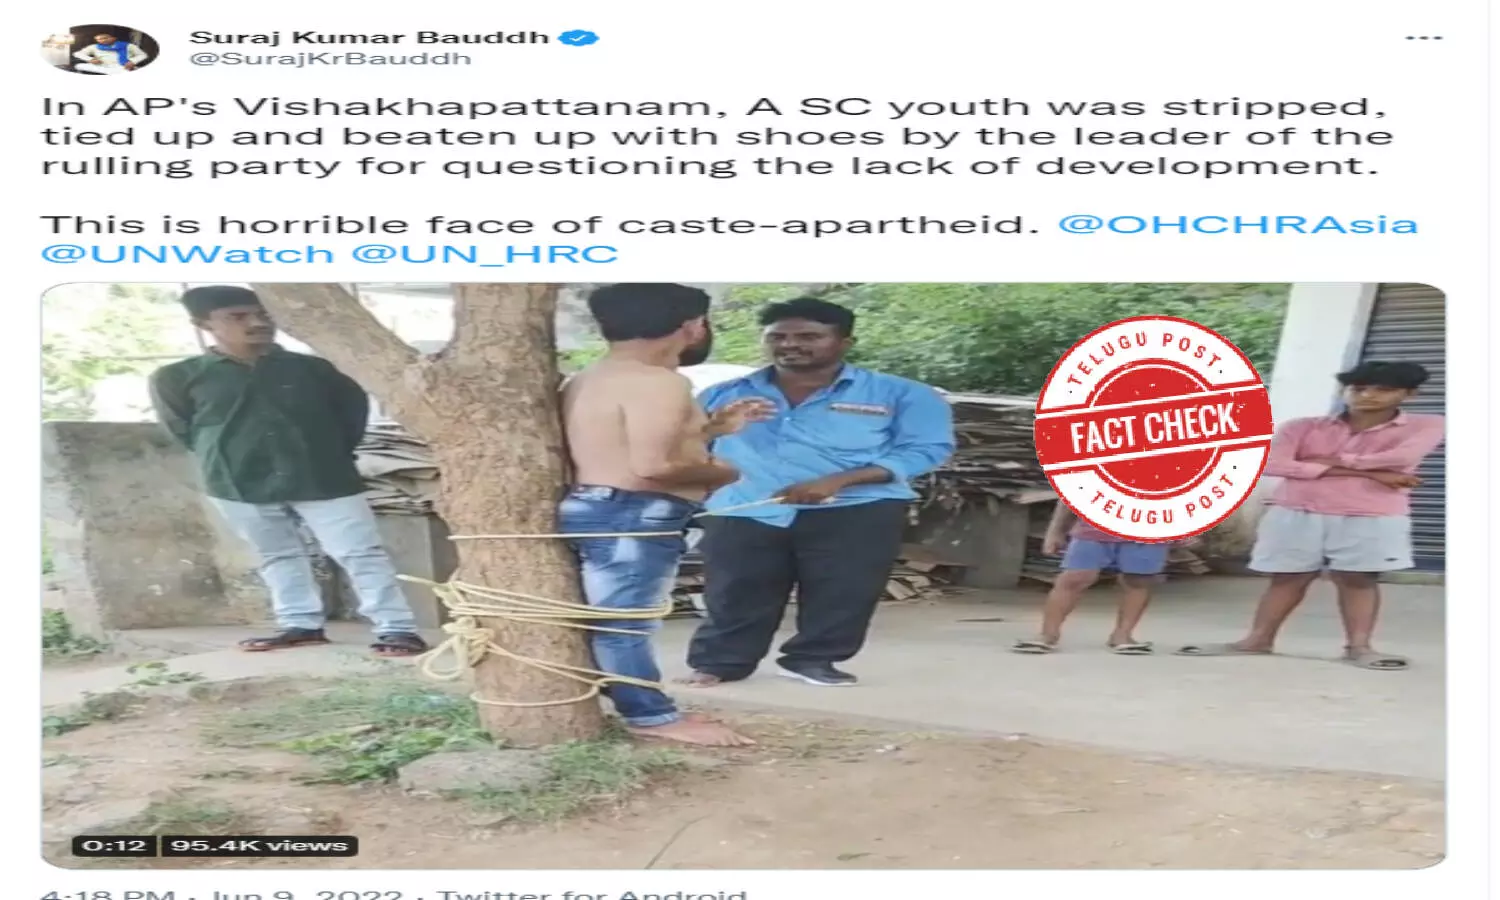 Dalit man beaten in Vizag, but NOT due to caste-aparthied